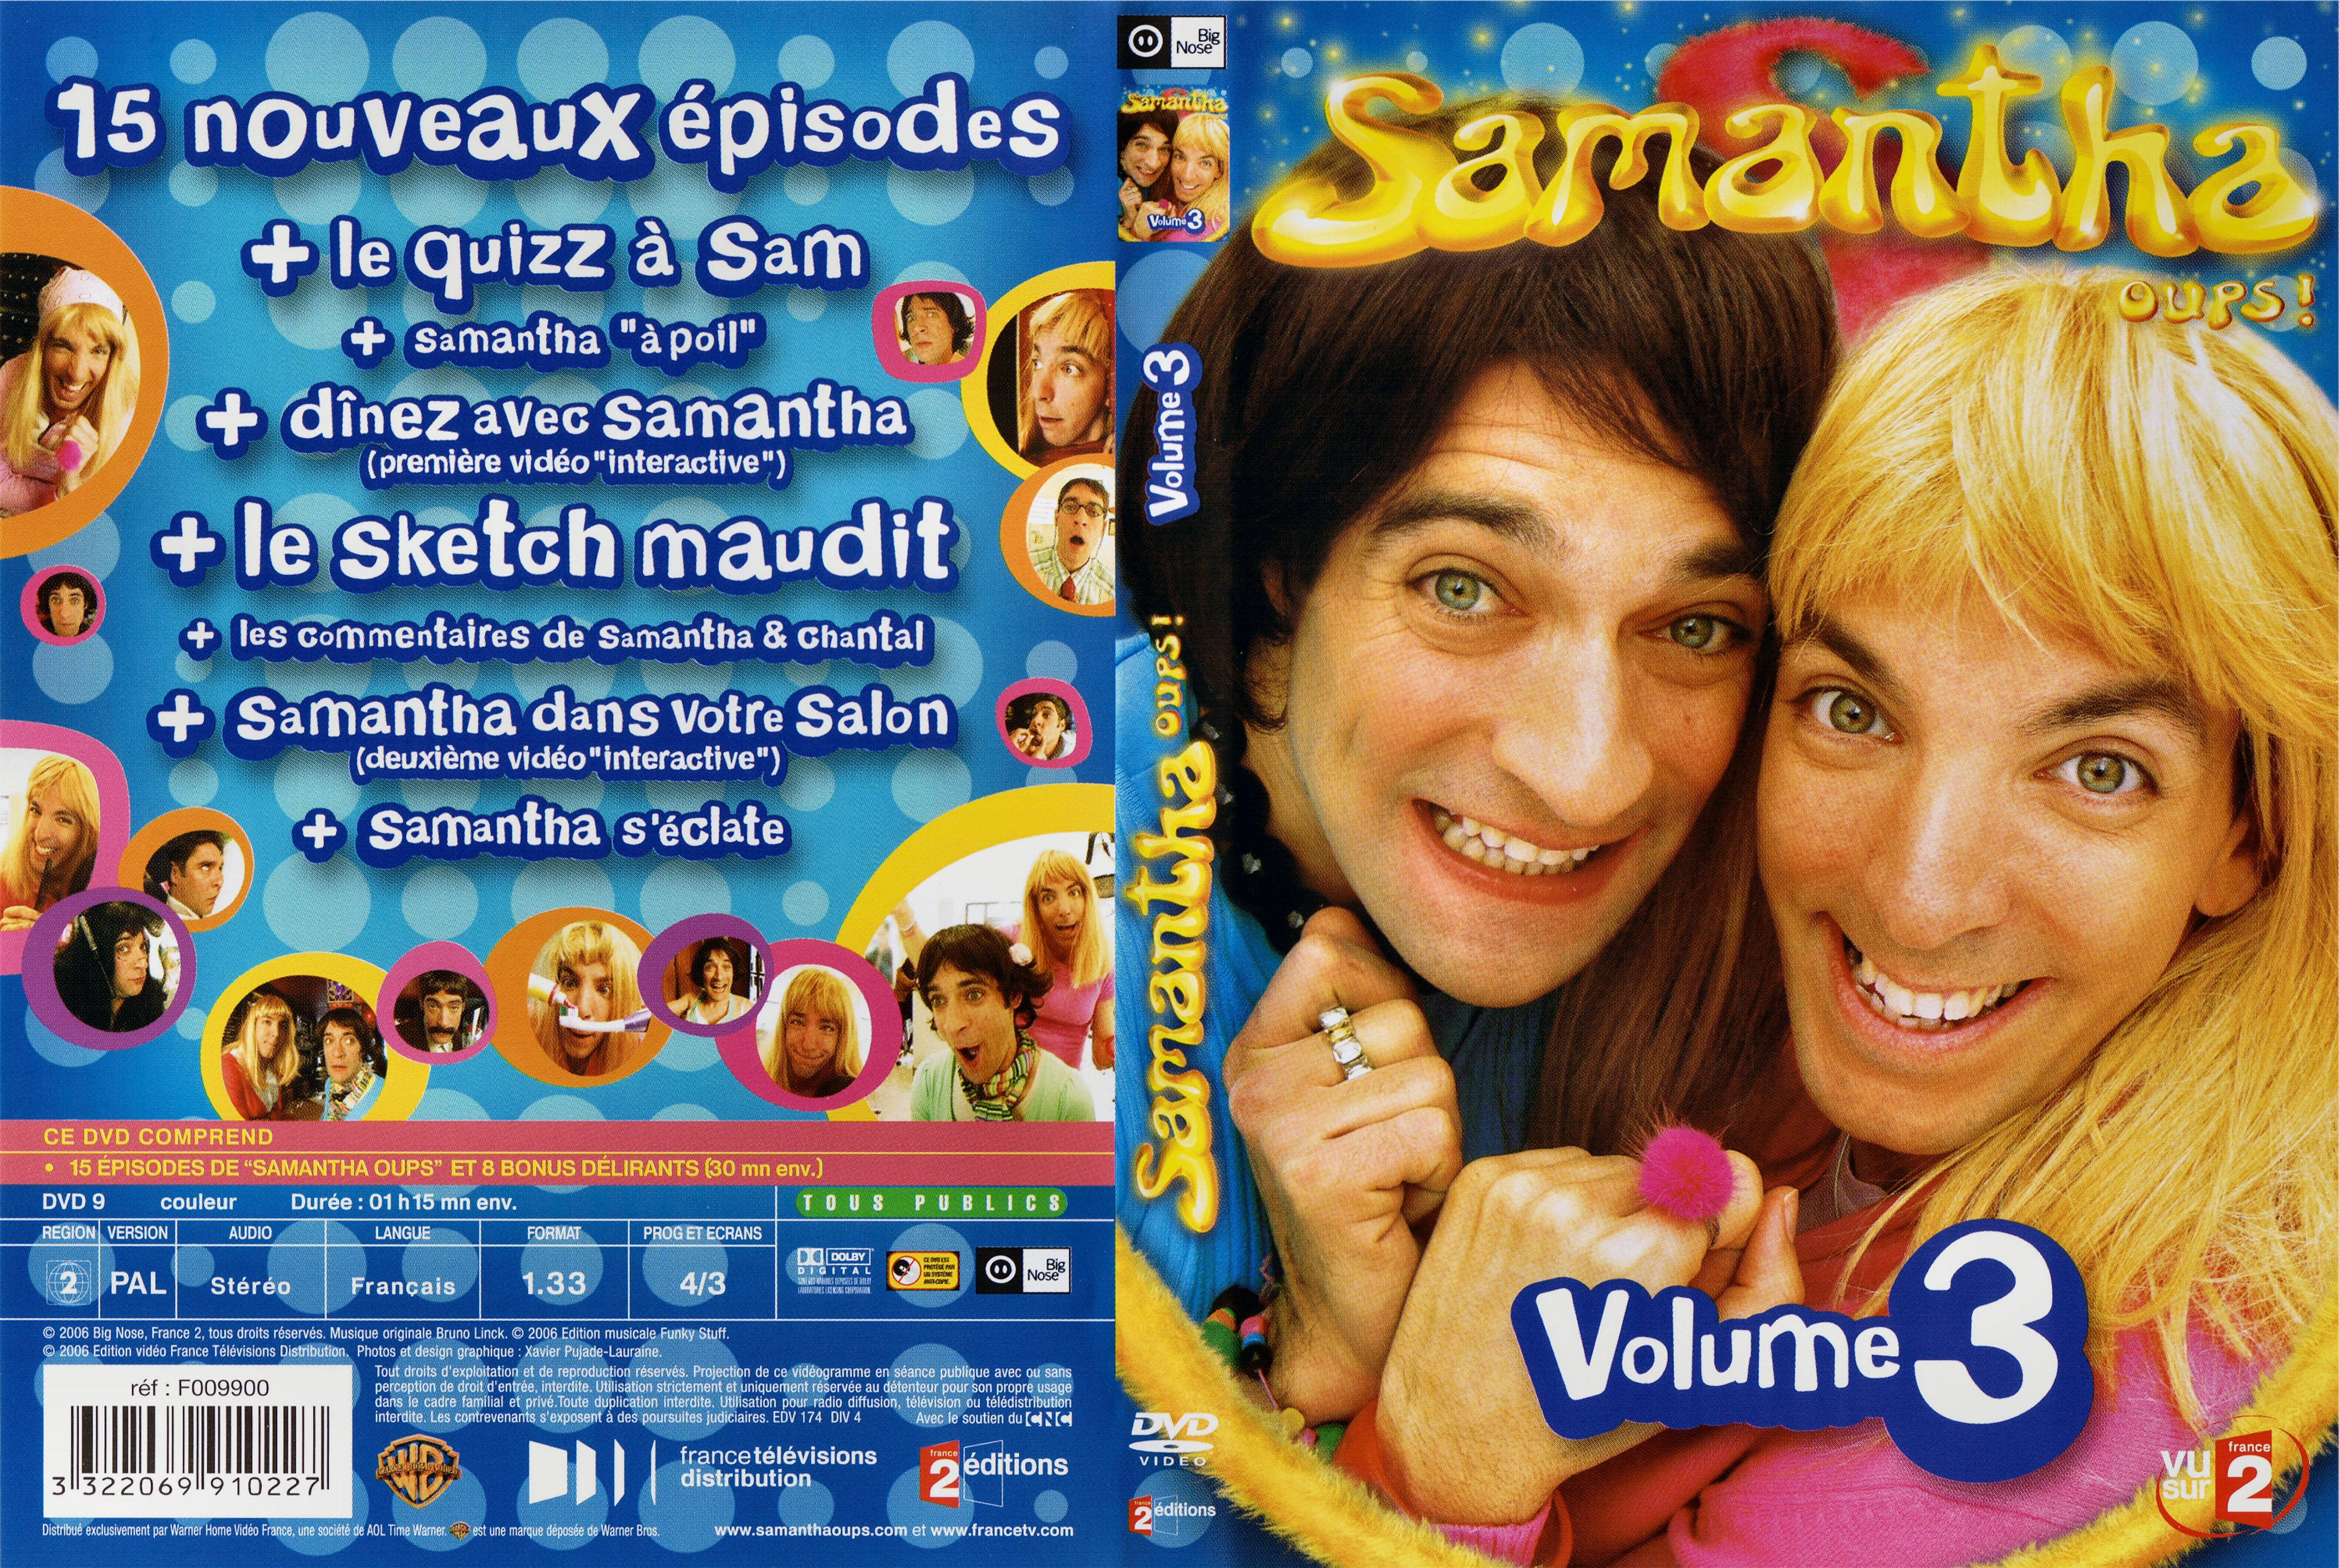 Jaquette DVD Samantha oups vol 3